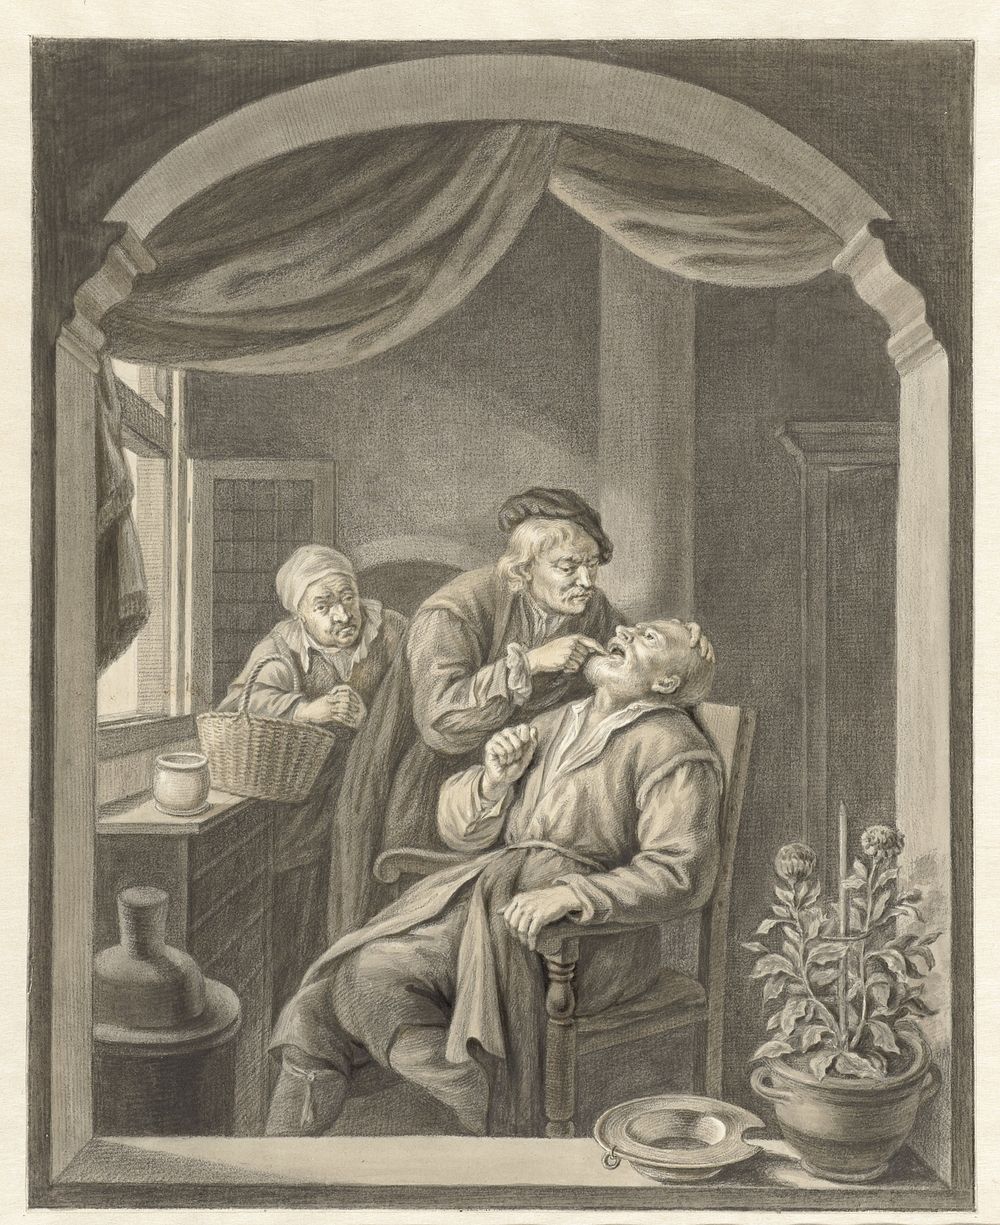 De tandarts (1741 - 1820) by Abraham Delfos and Gerard Dou